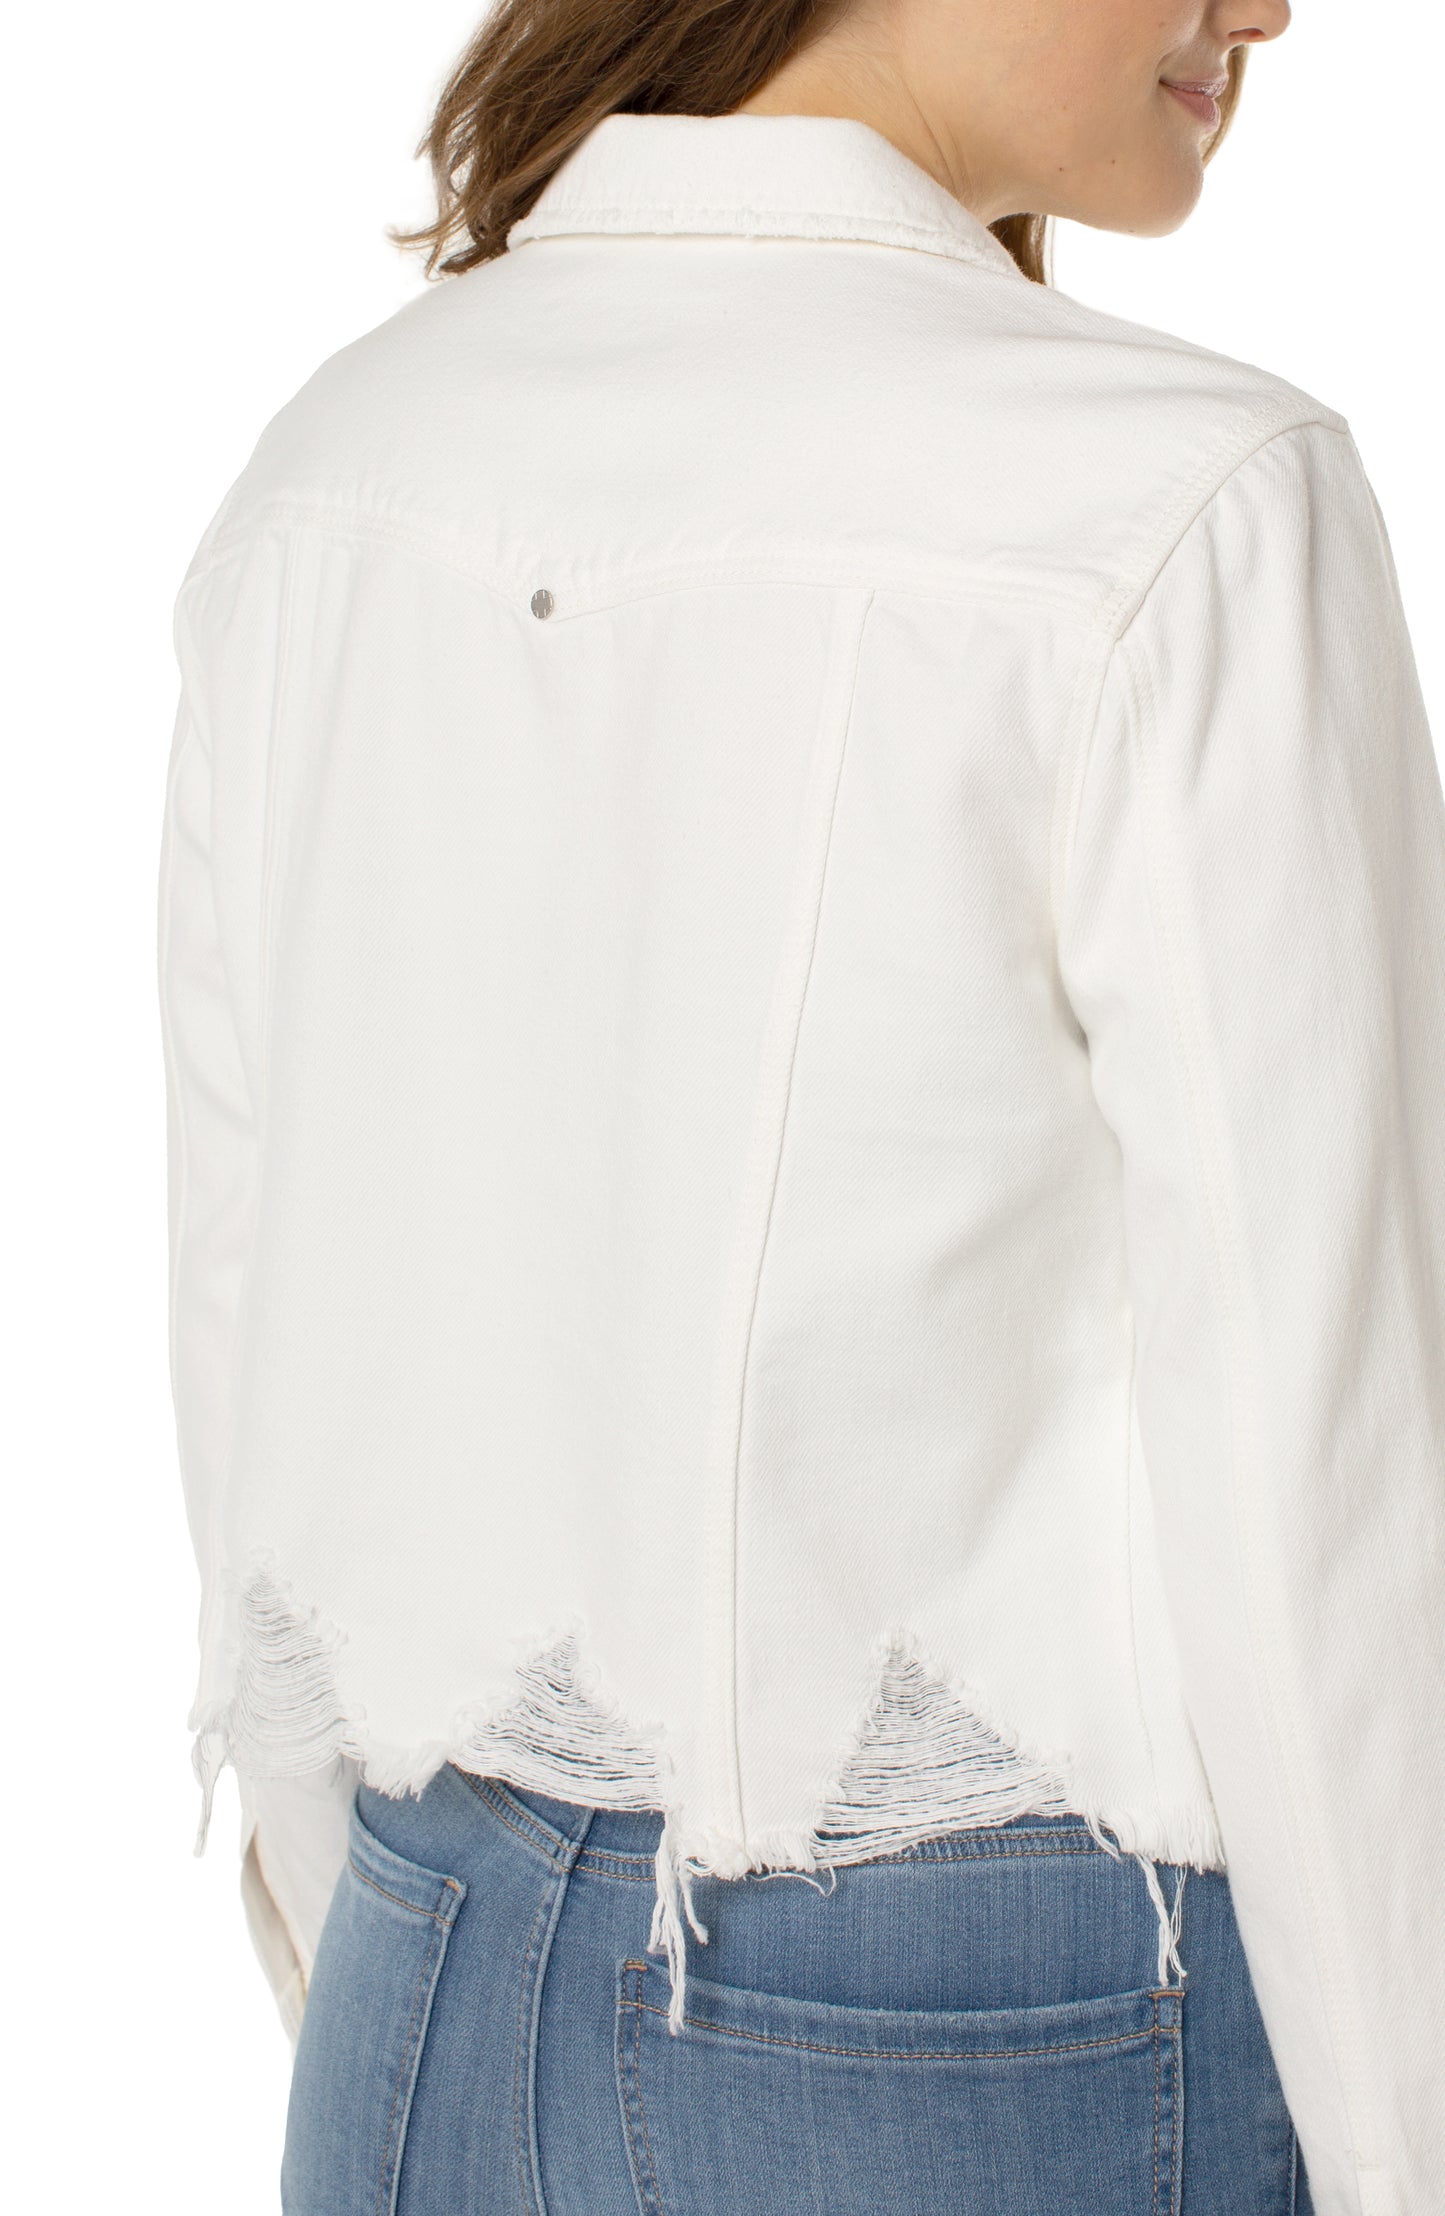 Liverpool Denim Jacket with Shredded Hem (Prairie White)